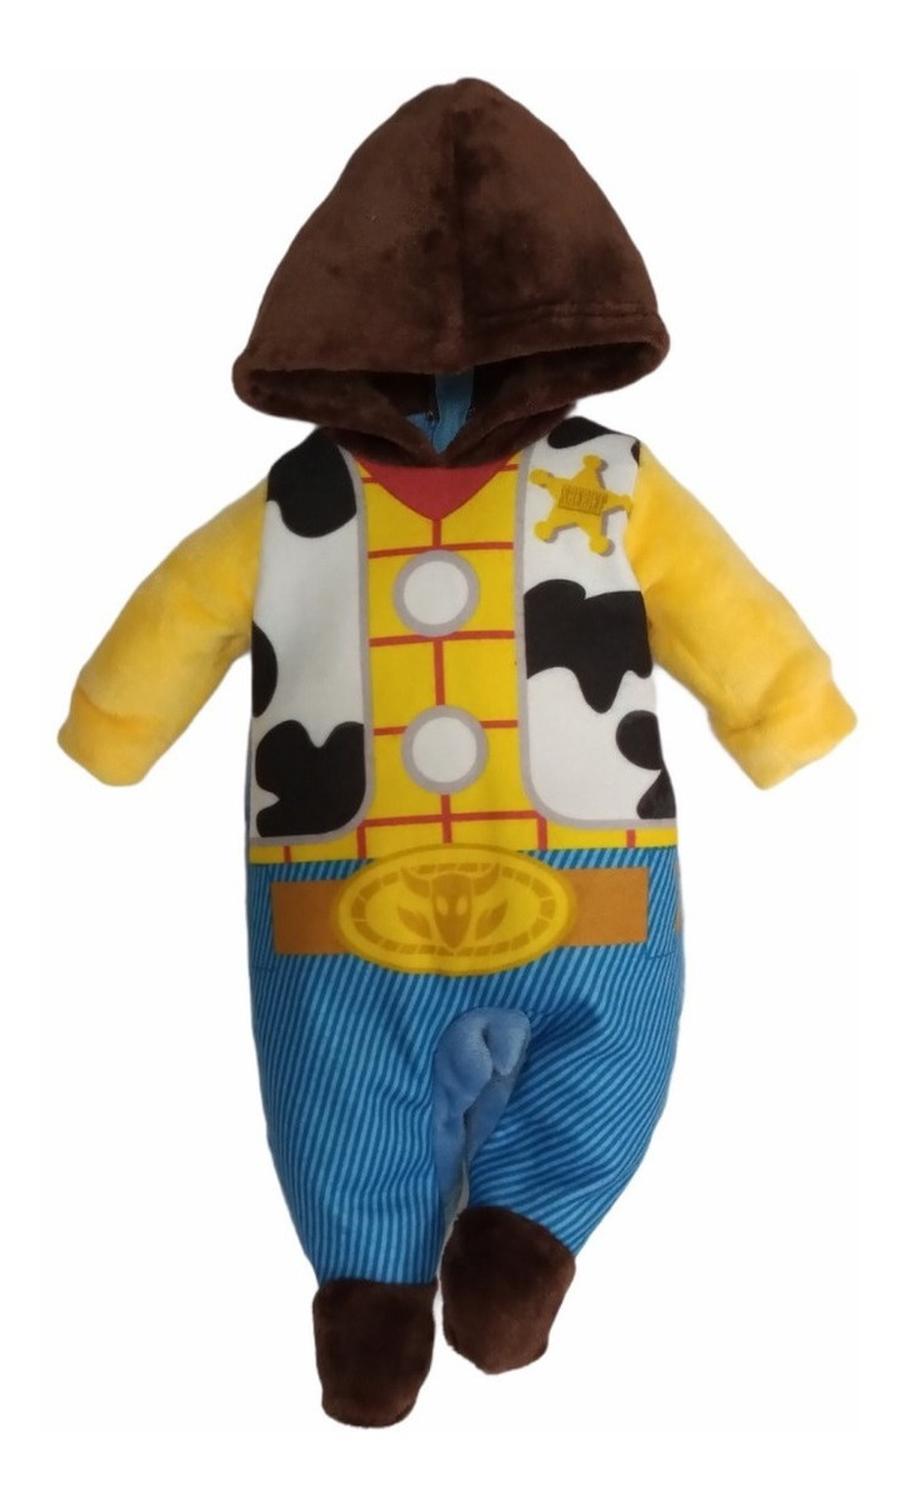 Kit 3 Mamelucos Disney para Bebé con Gorro Bordado Woody, Rex, Hamm